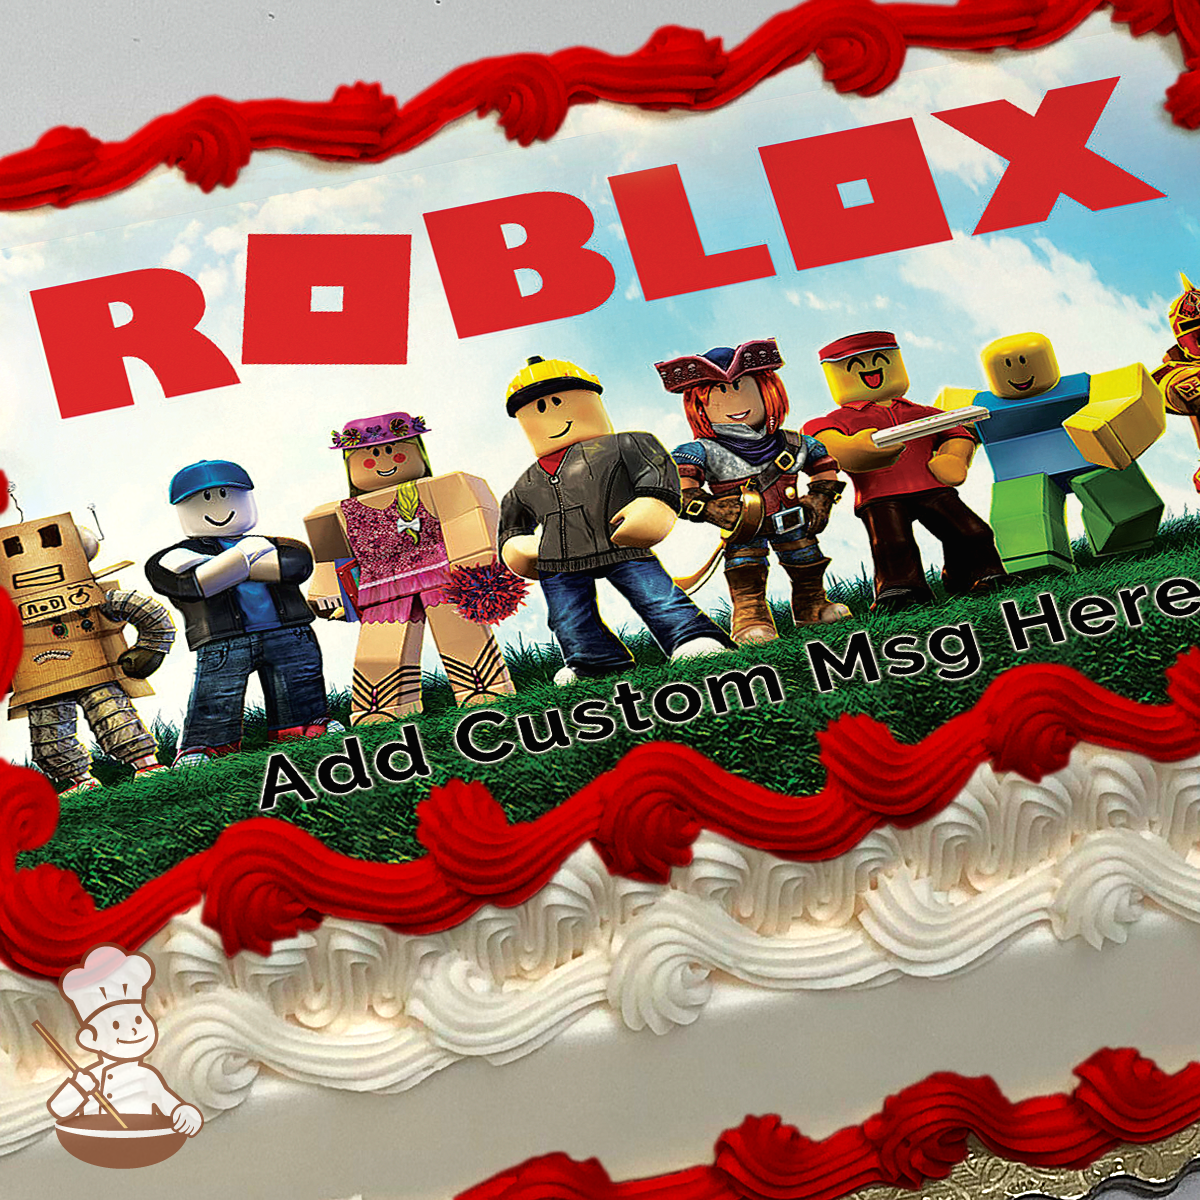 Roblox themed cake  Roblox birthday cake, Themed cakes, Roblox cake